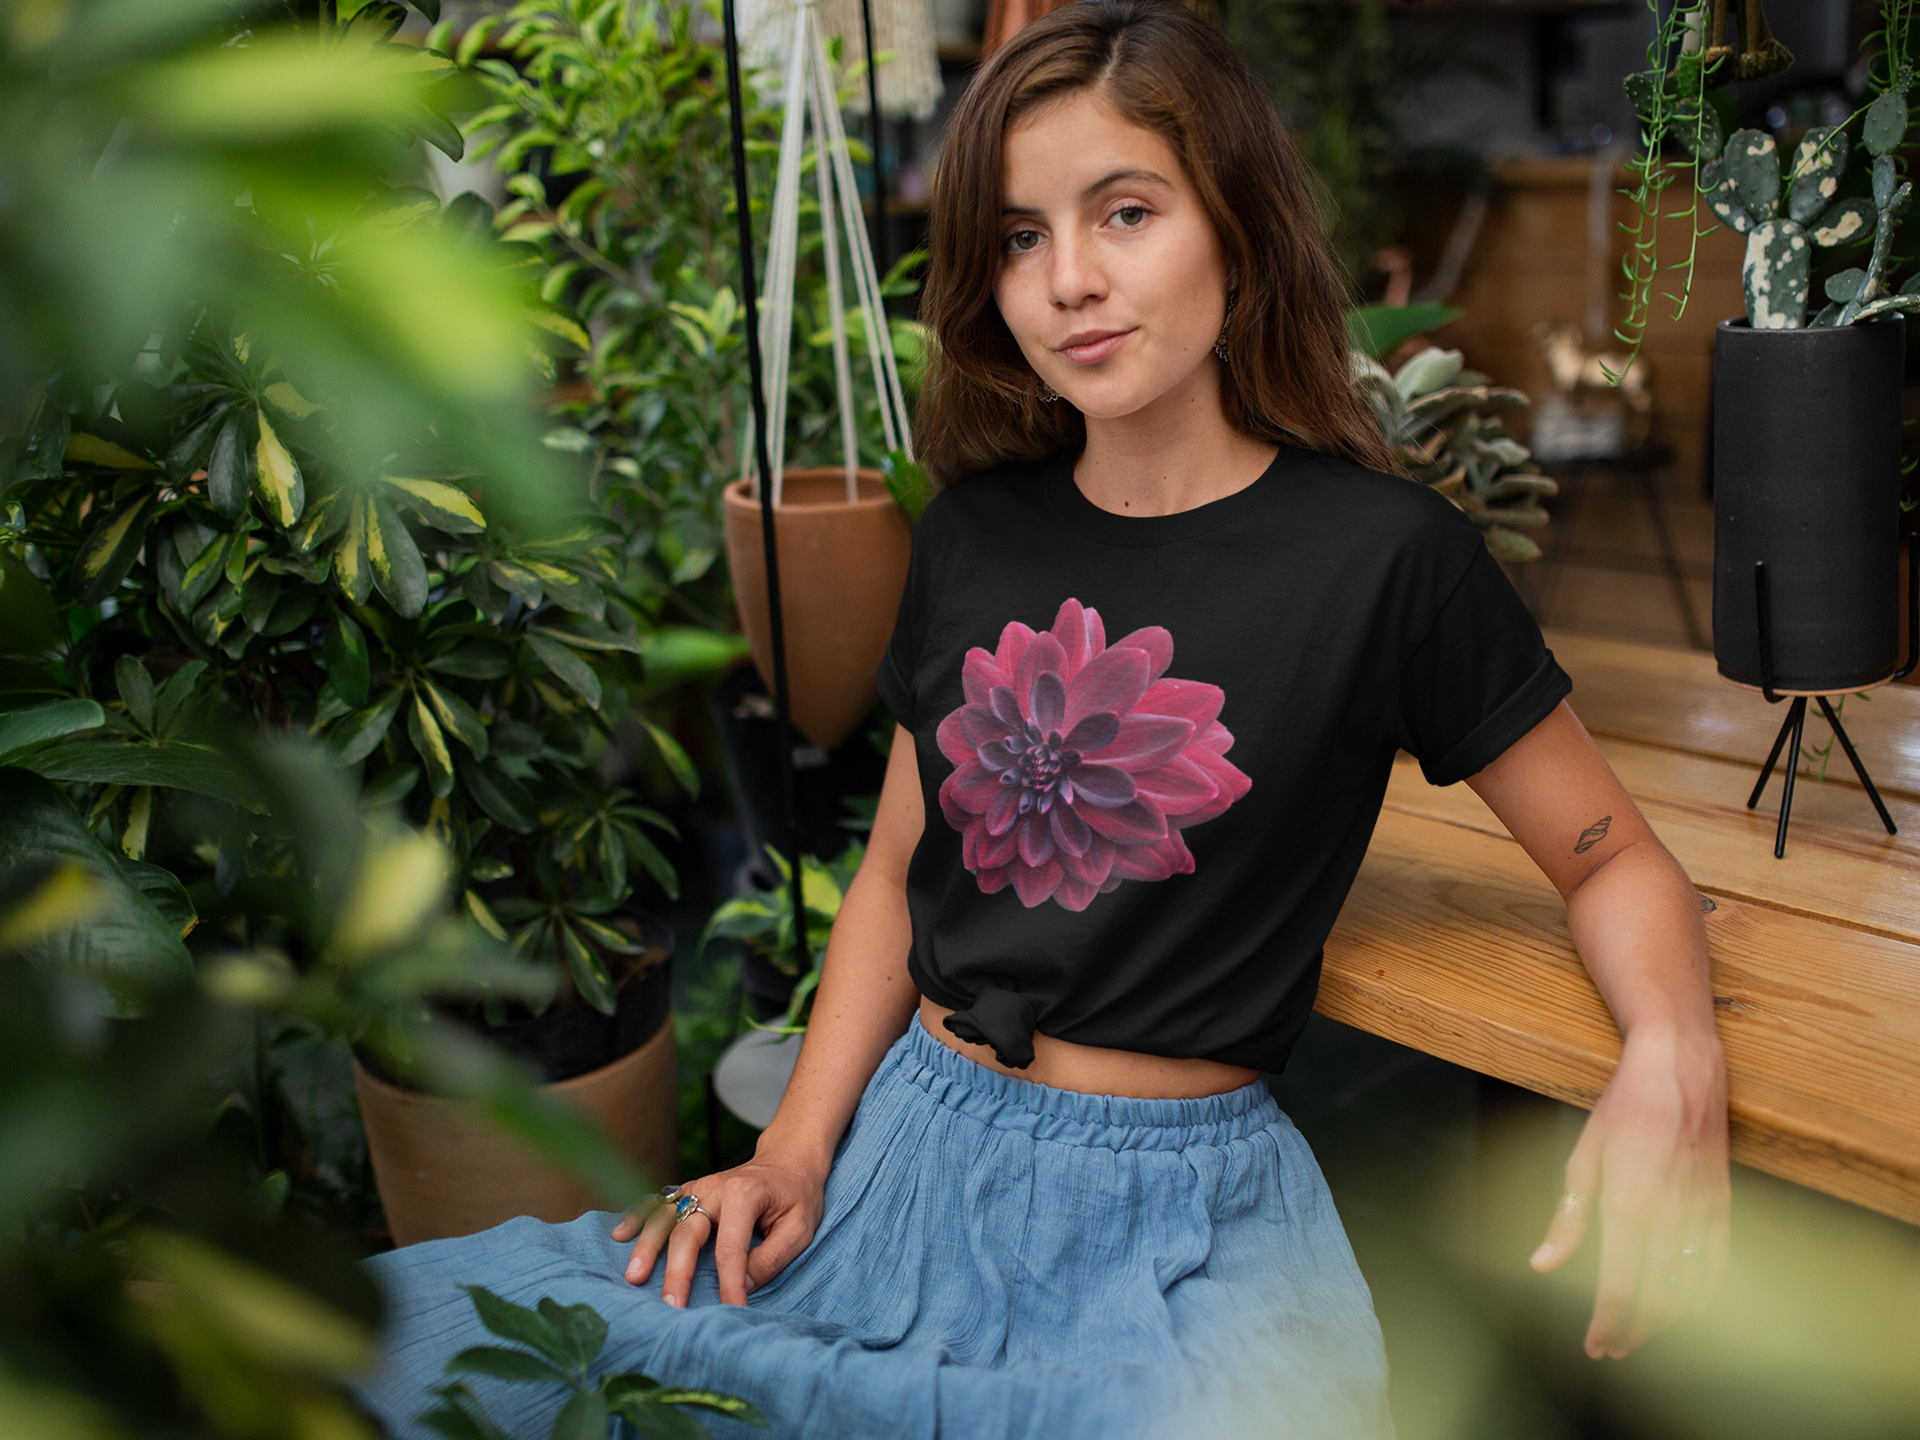 Dahlia Women's Favourite T-Shirt - Nature of Flowers